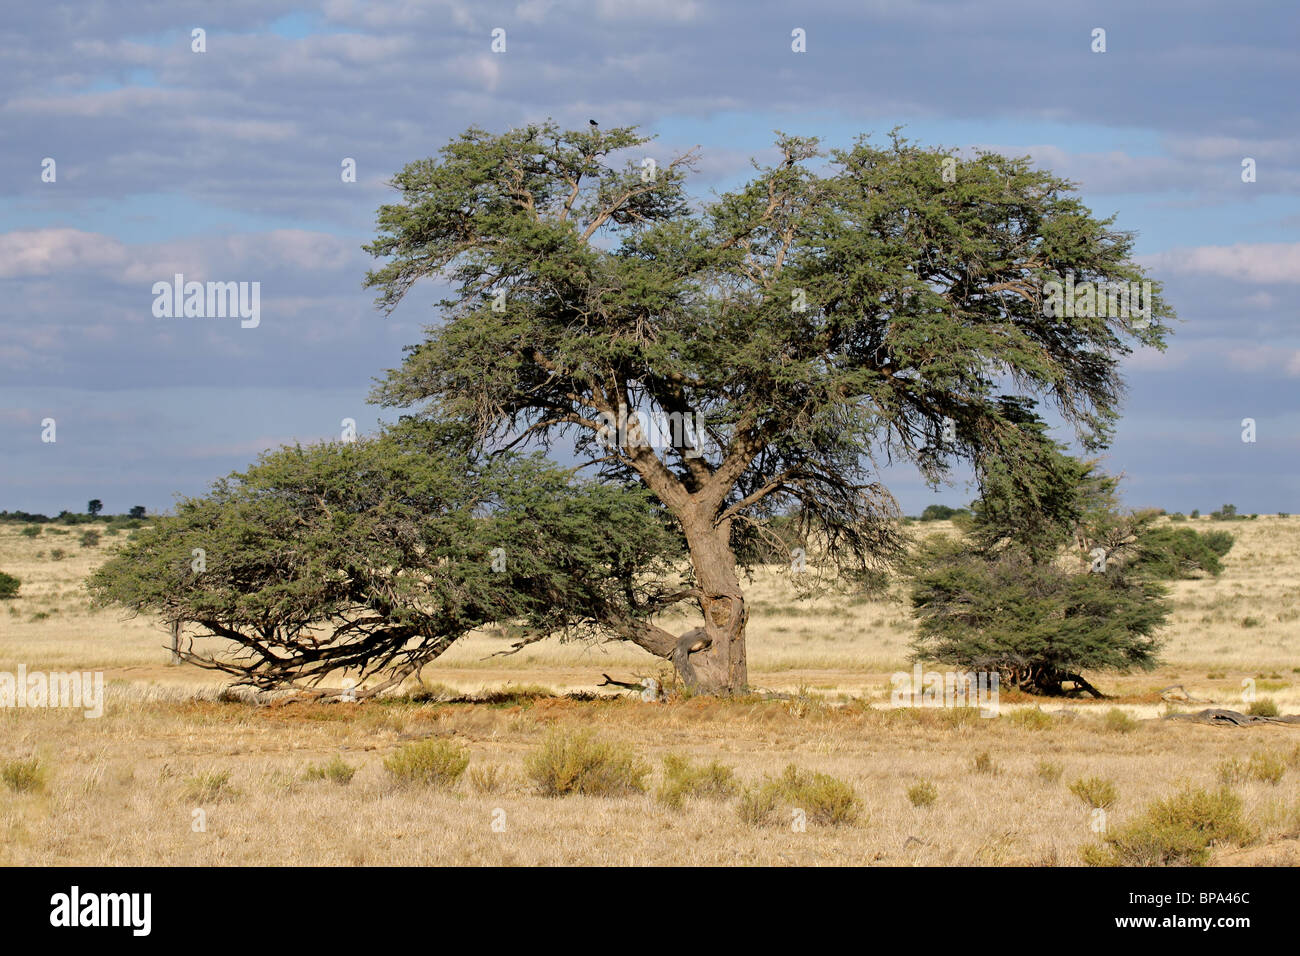 Paysage africain avec un camelthorn arbre Acacia (Acacia erioloba), Kalahari, Afrique du Sud Banque D'Images